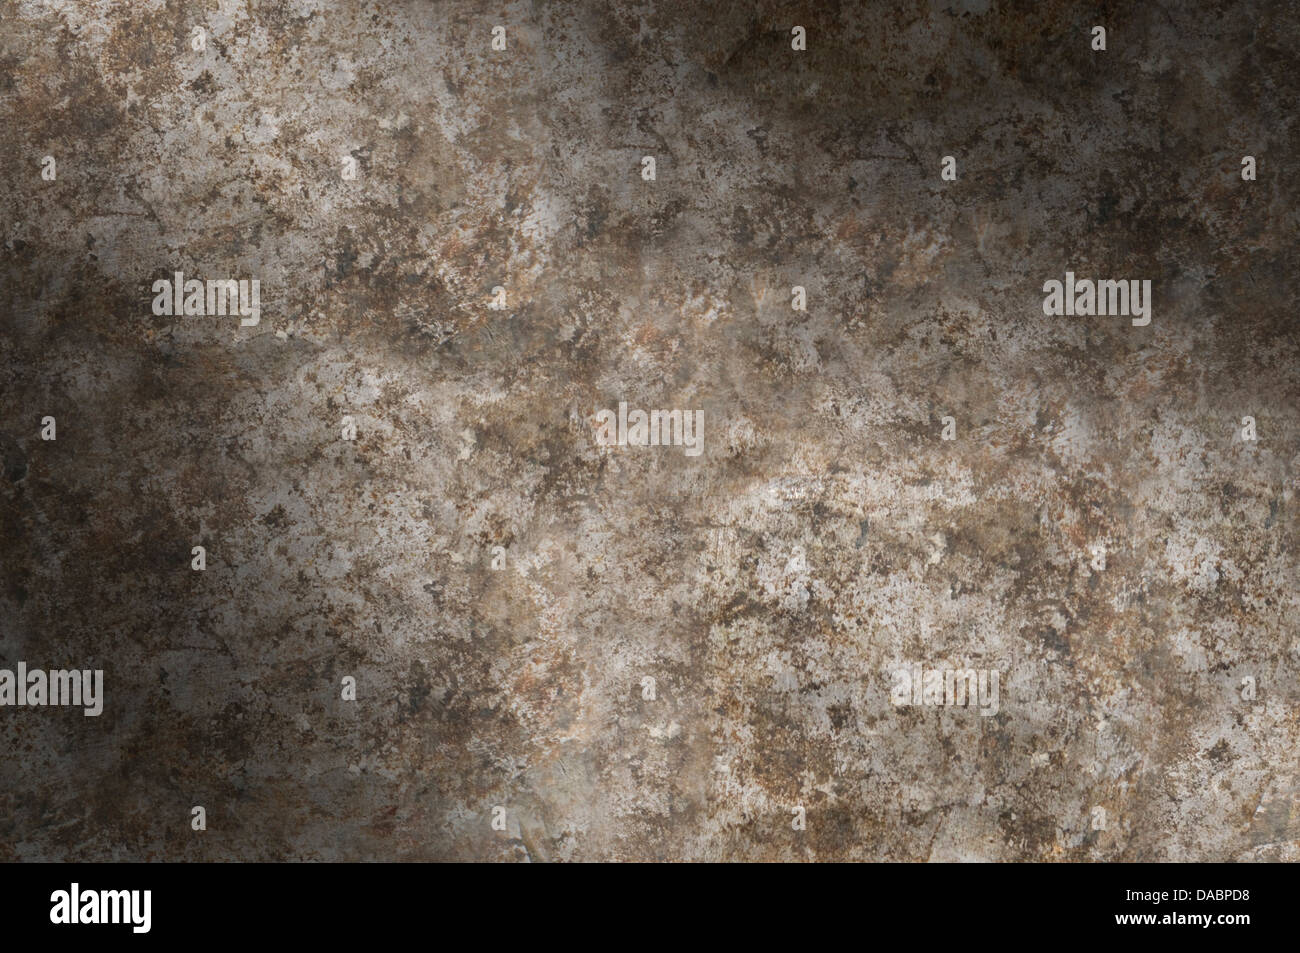 Distressed gray metal surface texture lit diagonally Stock Photo